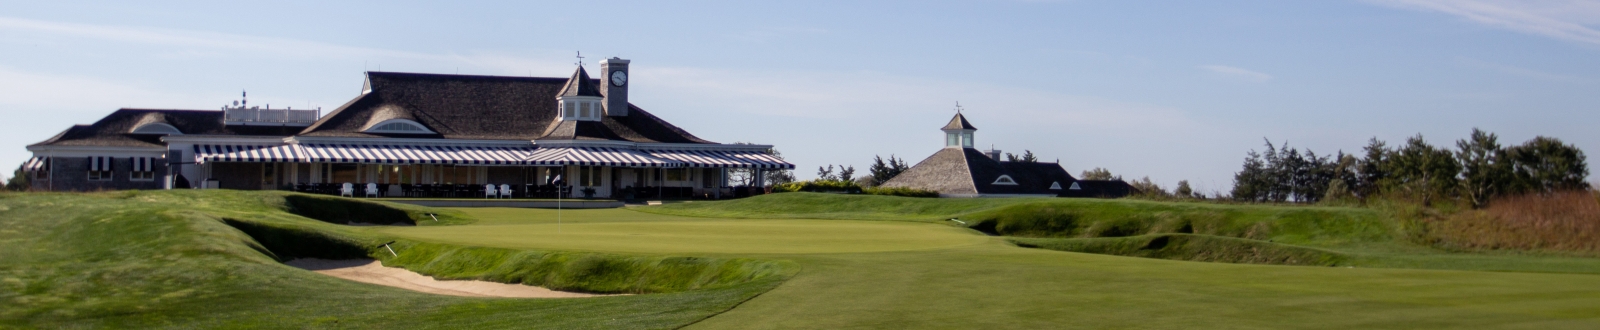 Atlantic Golf Club Clubhouse